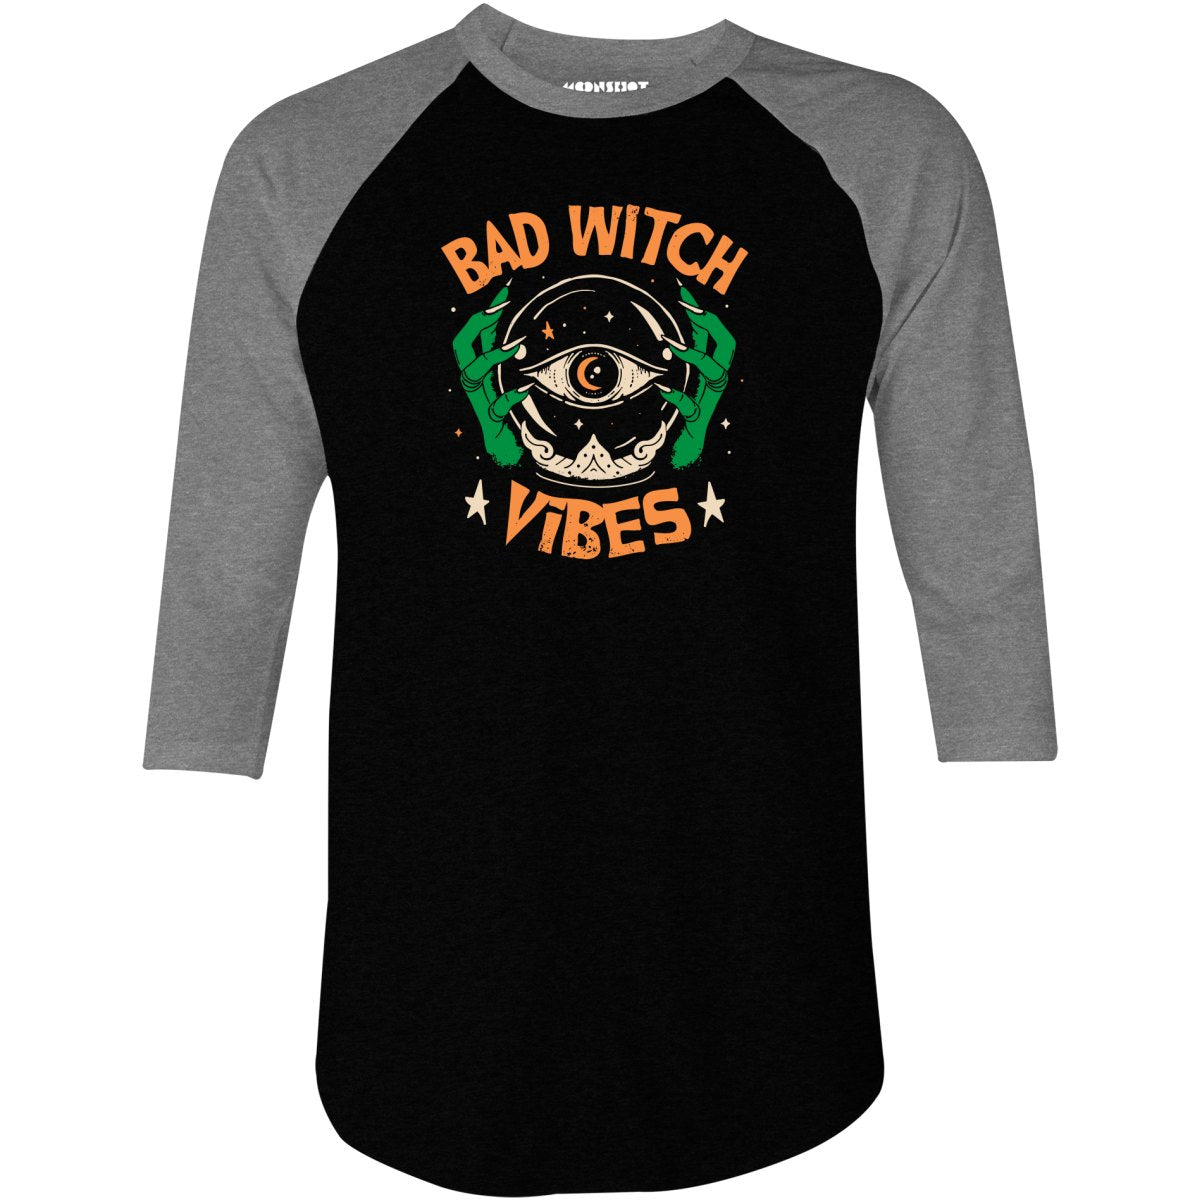 Bad Witch Vibes - 3/4 Sleeve Raglan T-Shirt